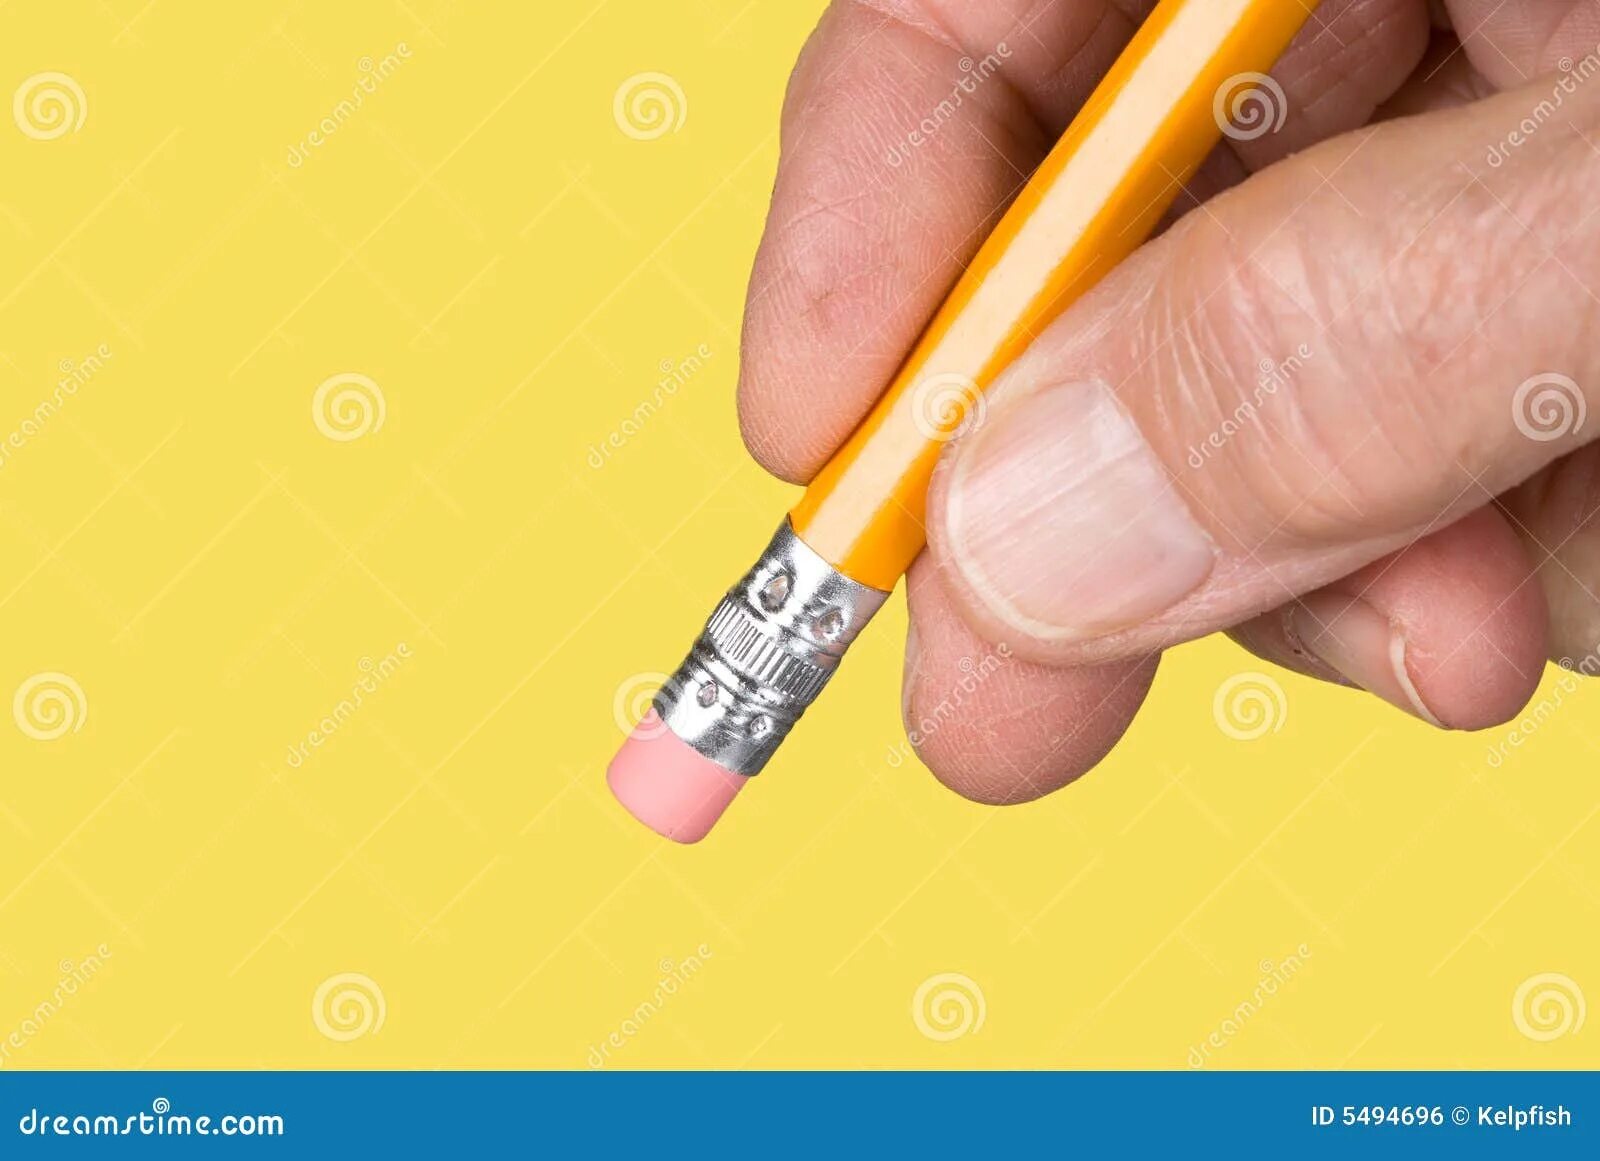 Резинка для стирания карандаша. Ластик карандаш. Карандаш со стеркой. Рука с ластиком. Скрип карандаша